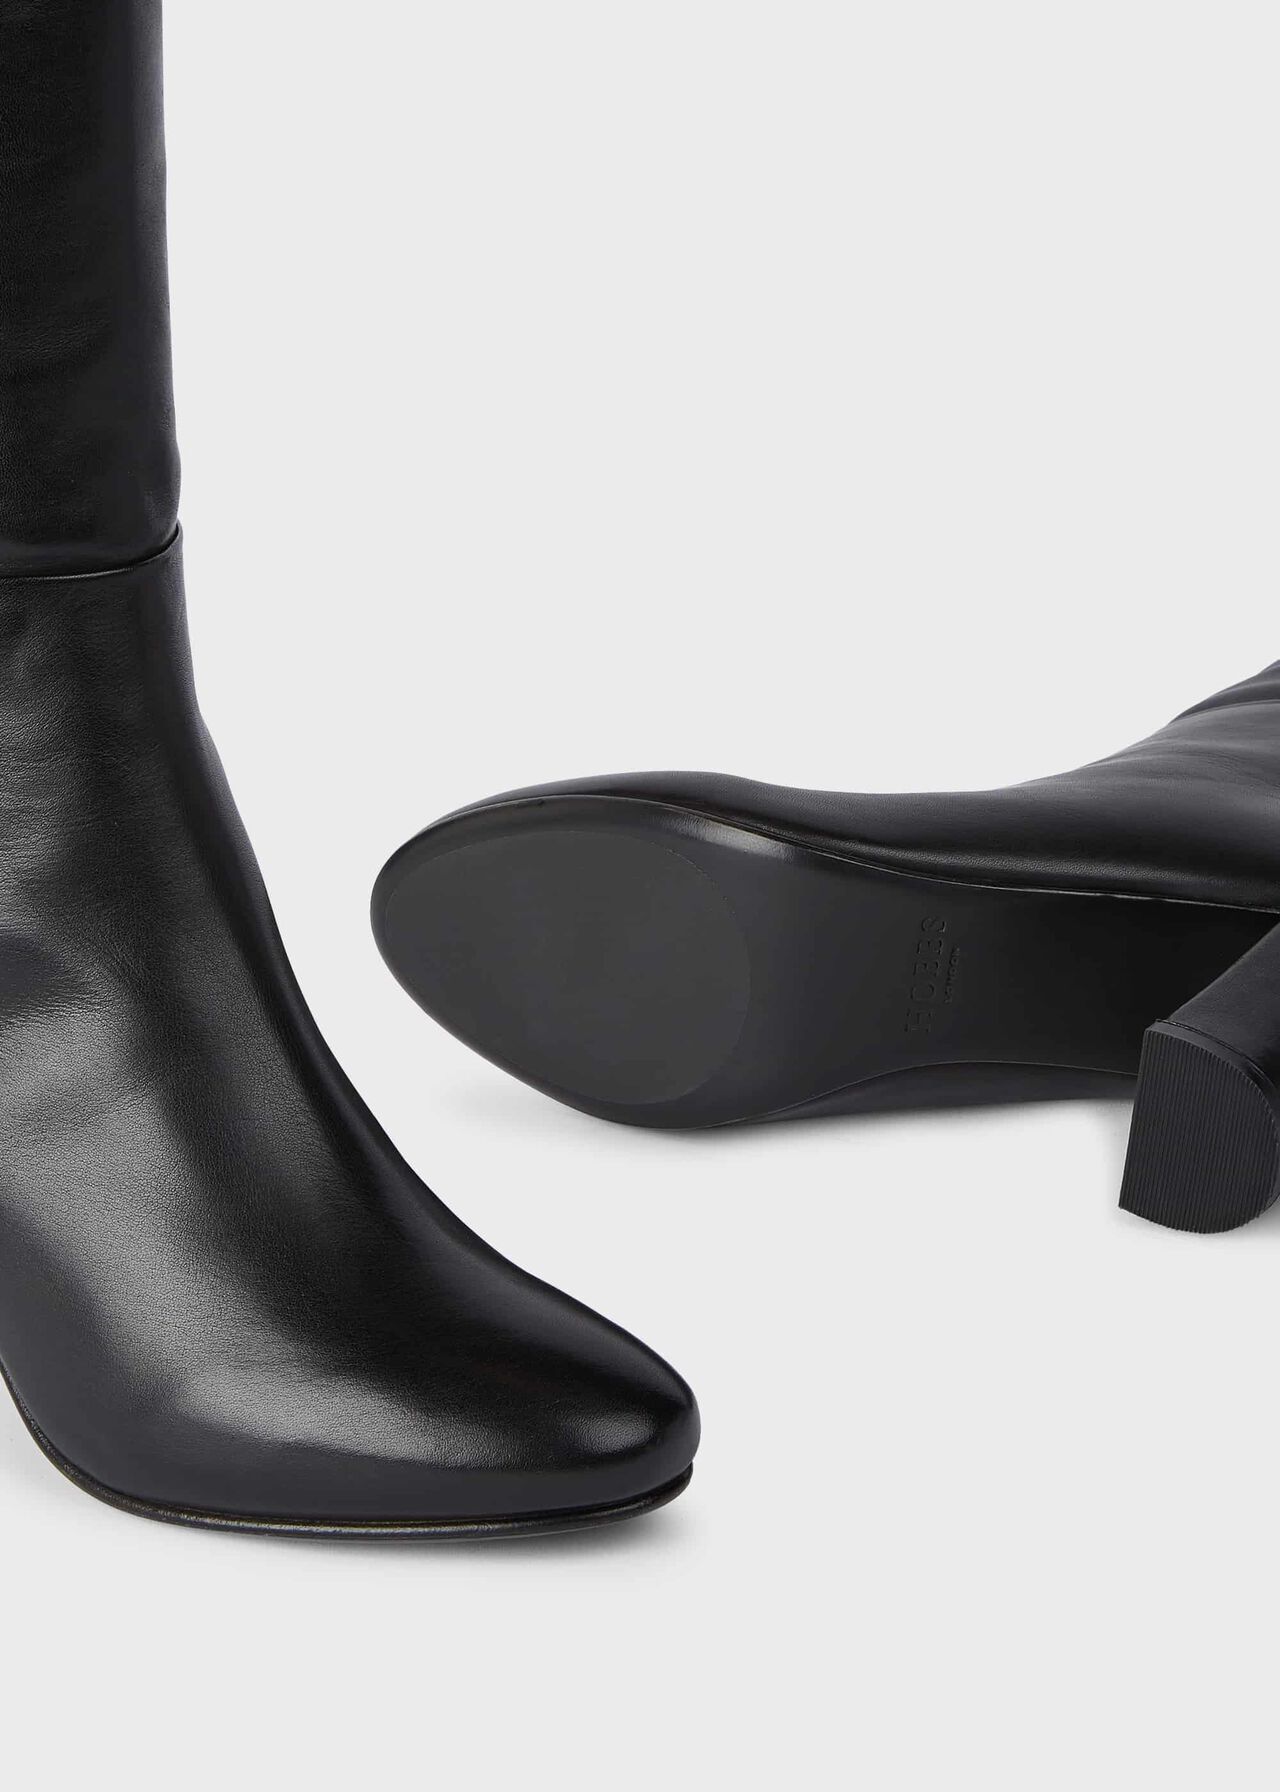 Anastasia Leather Knee High Boots, Black, hi-res